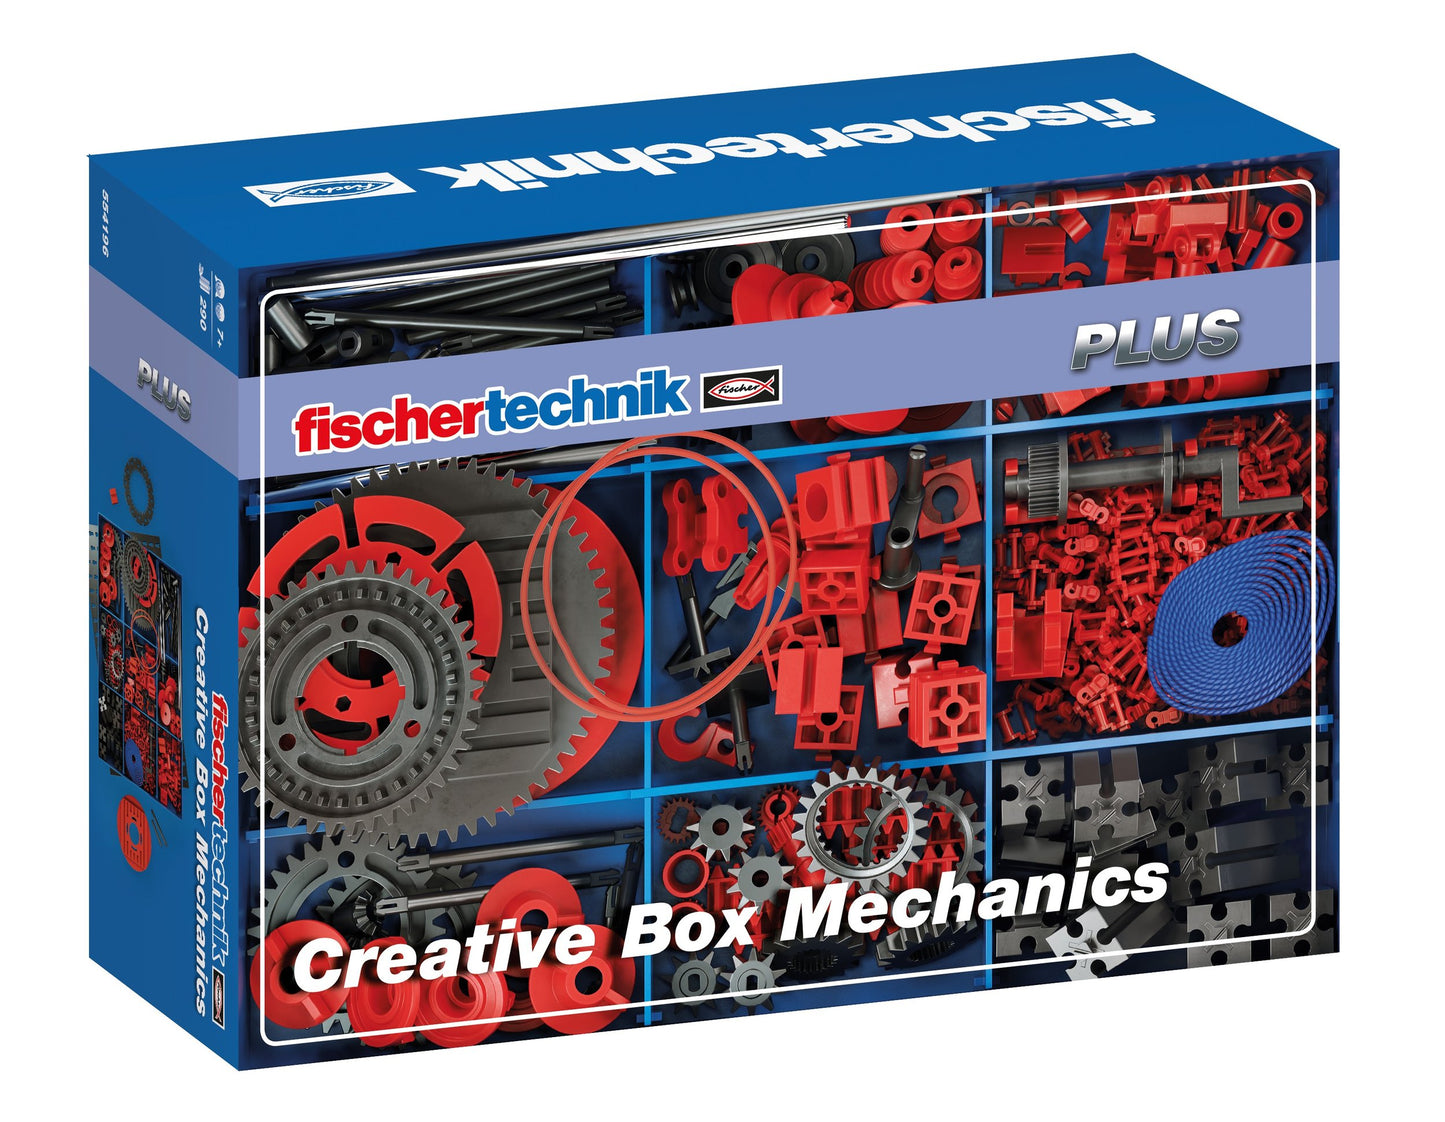 fischertechnik Creative Box Mechanics (PLUS)